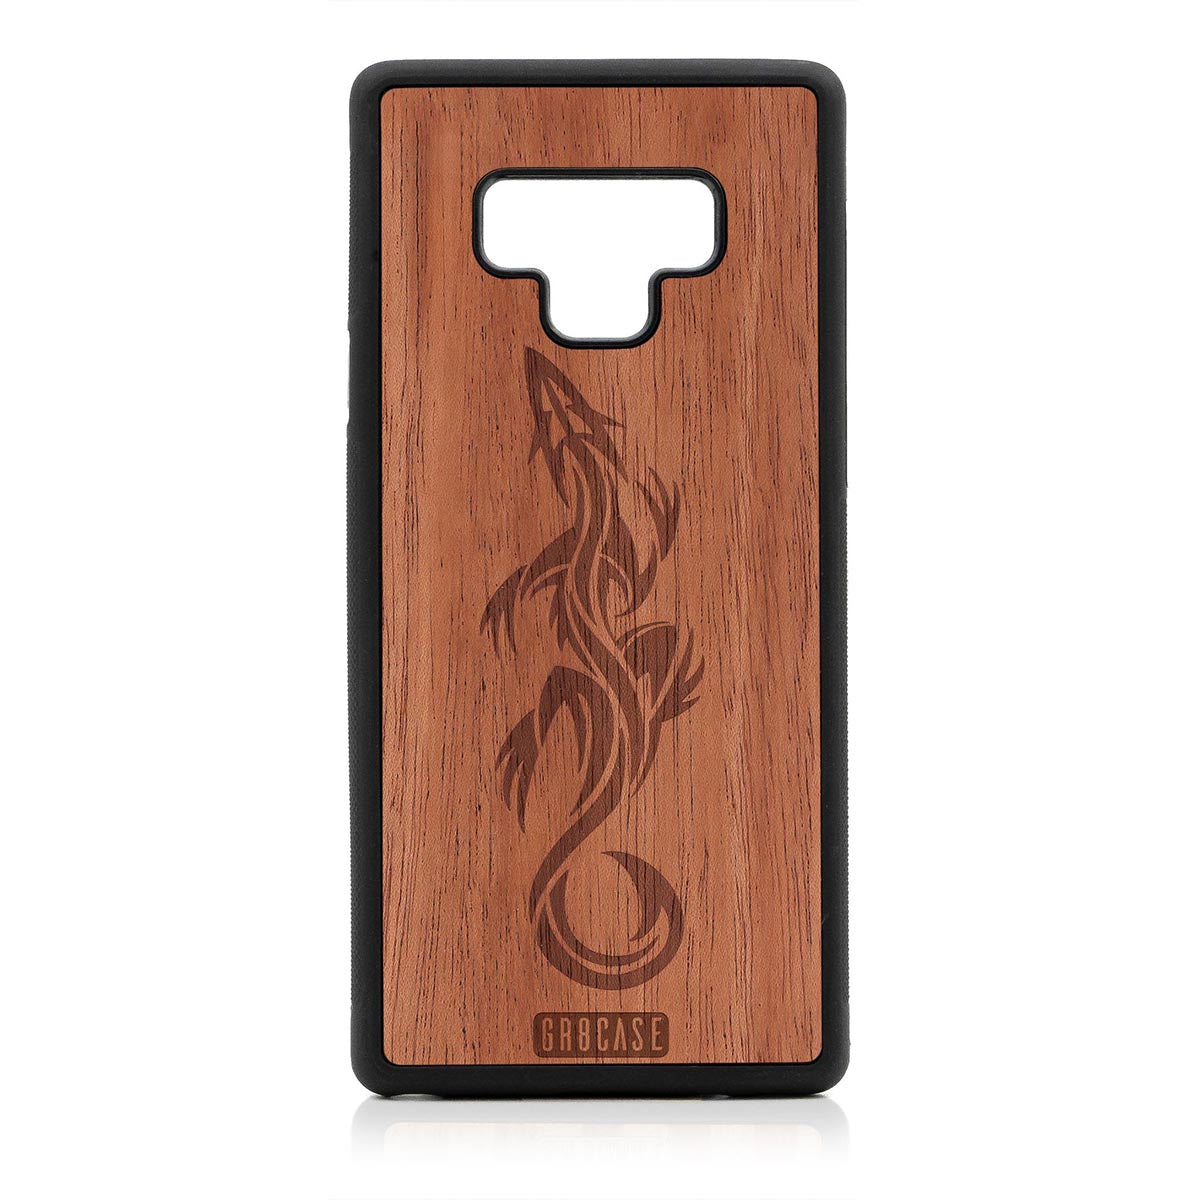 Lizard Design Wood Case Samsung Galaxy Note 9 by GR8CASE